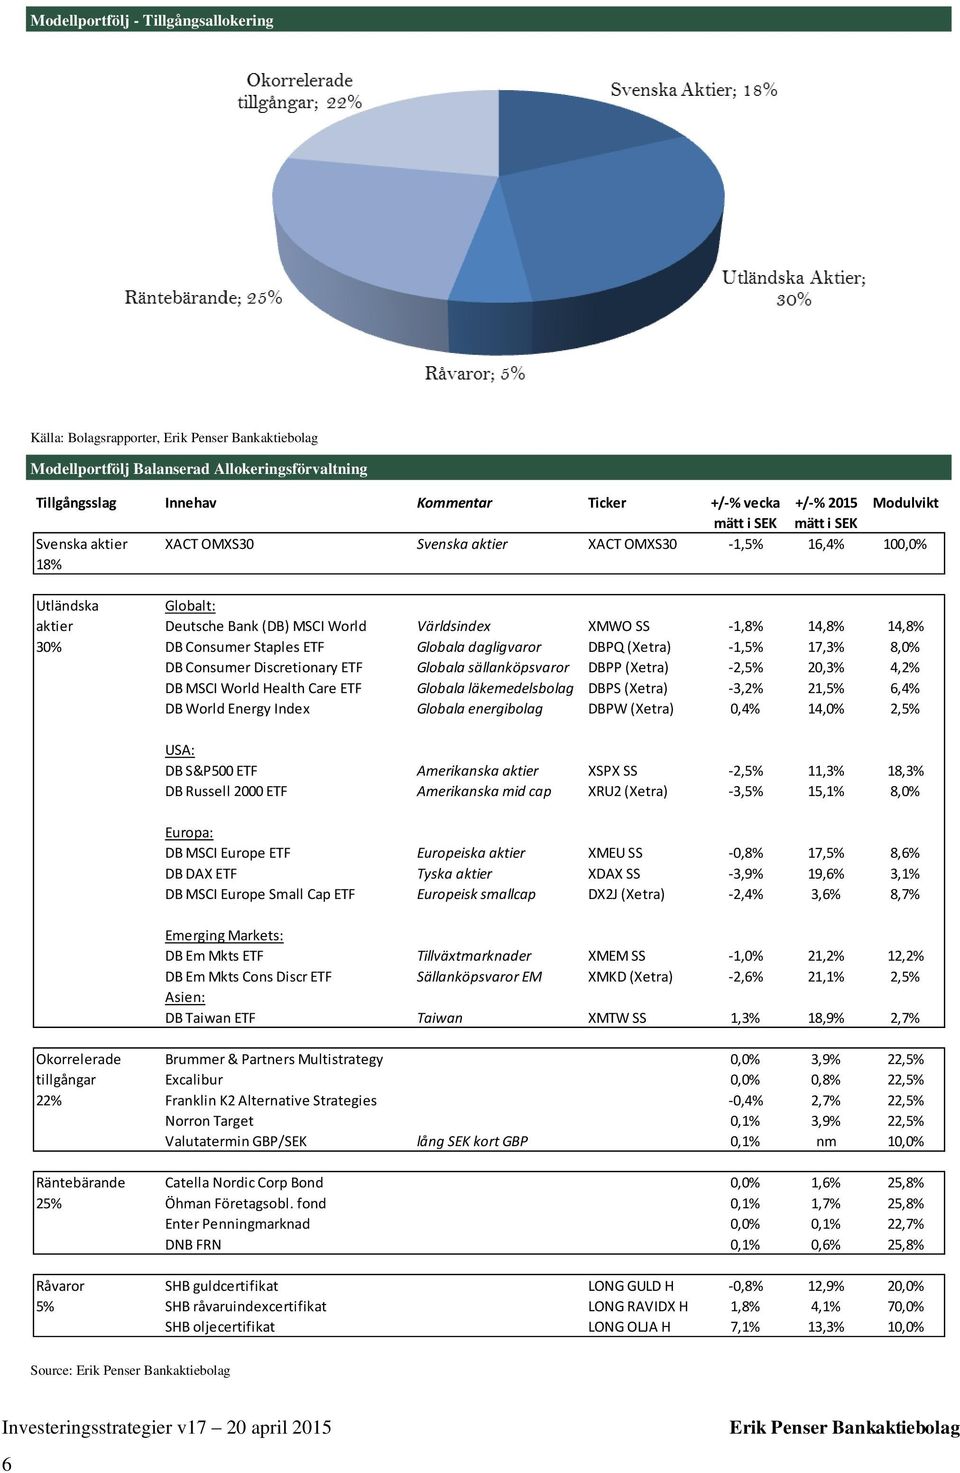 14,8% 30% DB Consumer Staples ETF Globala dagligvaror DBPQ (Xetra) -1,5% 17,3% 8,0% DB Consumer Discretionary ETF Globala sällanköpsvaror DBPP (Xetra) -2,5% 20,3% 4,2% DB MSCI World Health Care ETF